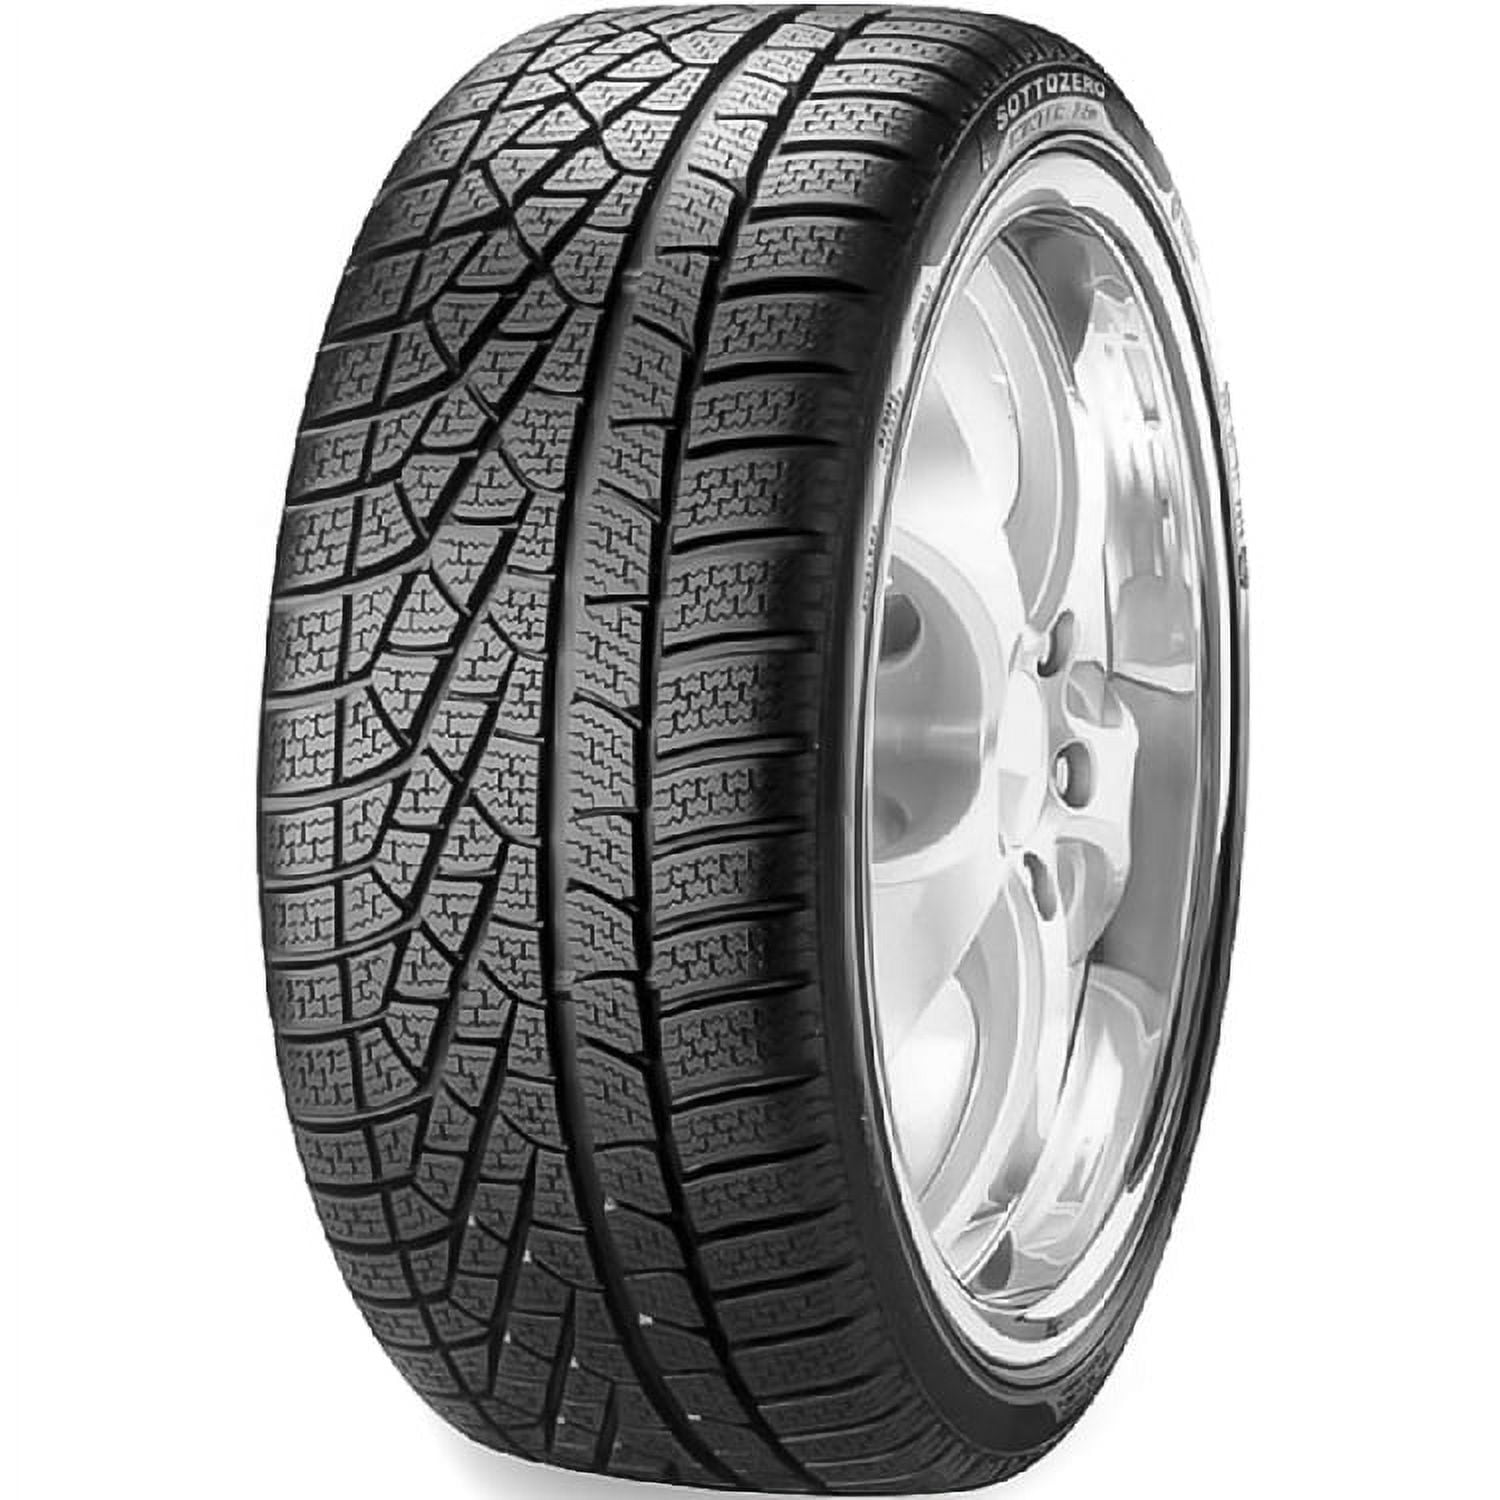 Pirelli Winter 210 Sottozero Serie II 245/50R18 RF 100H (Studless) Tire